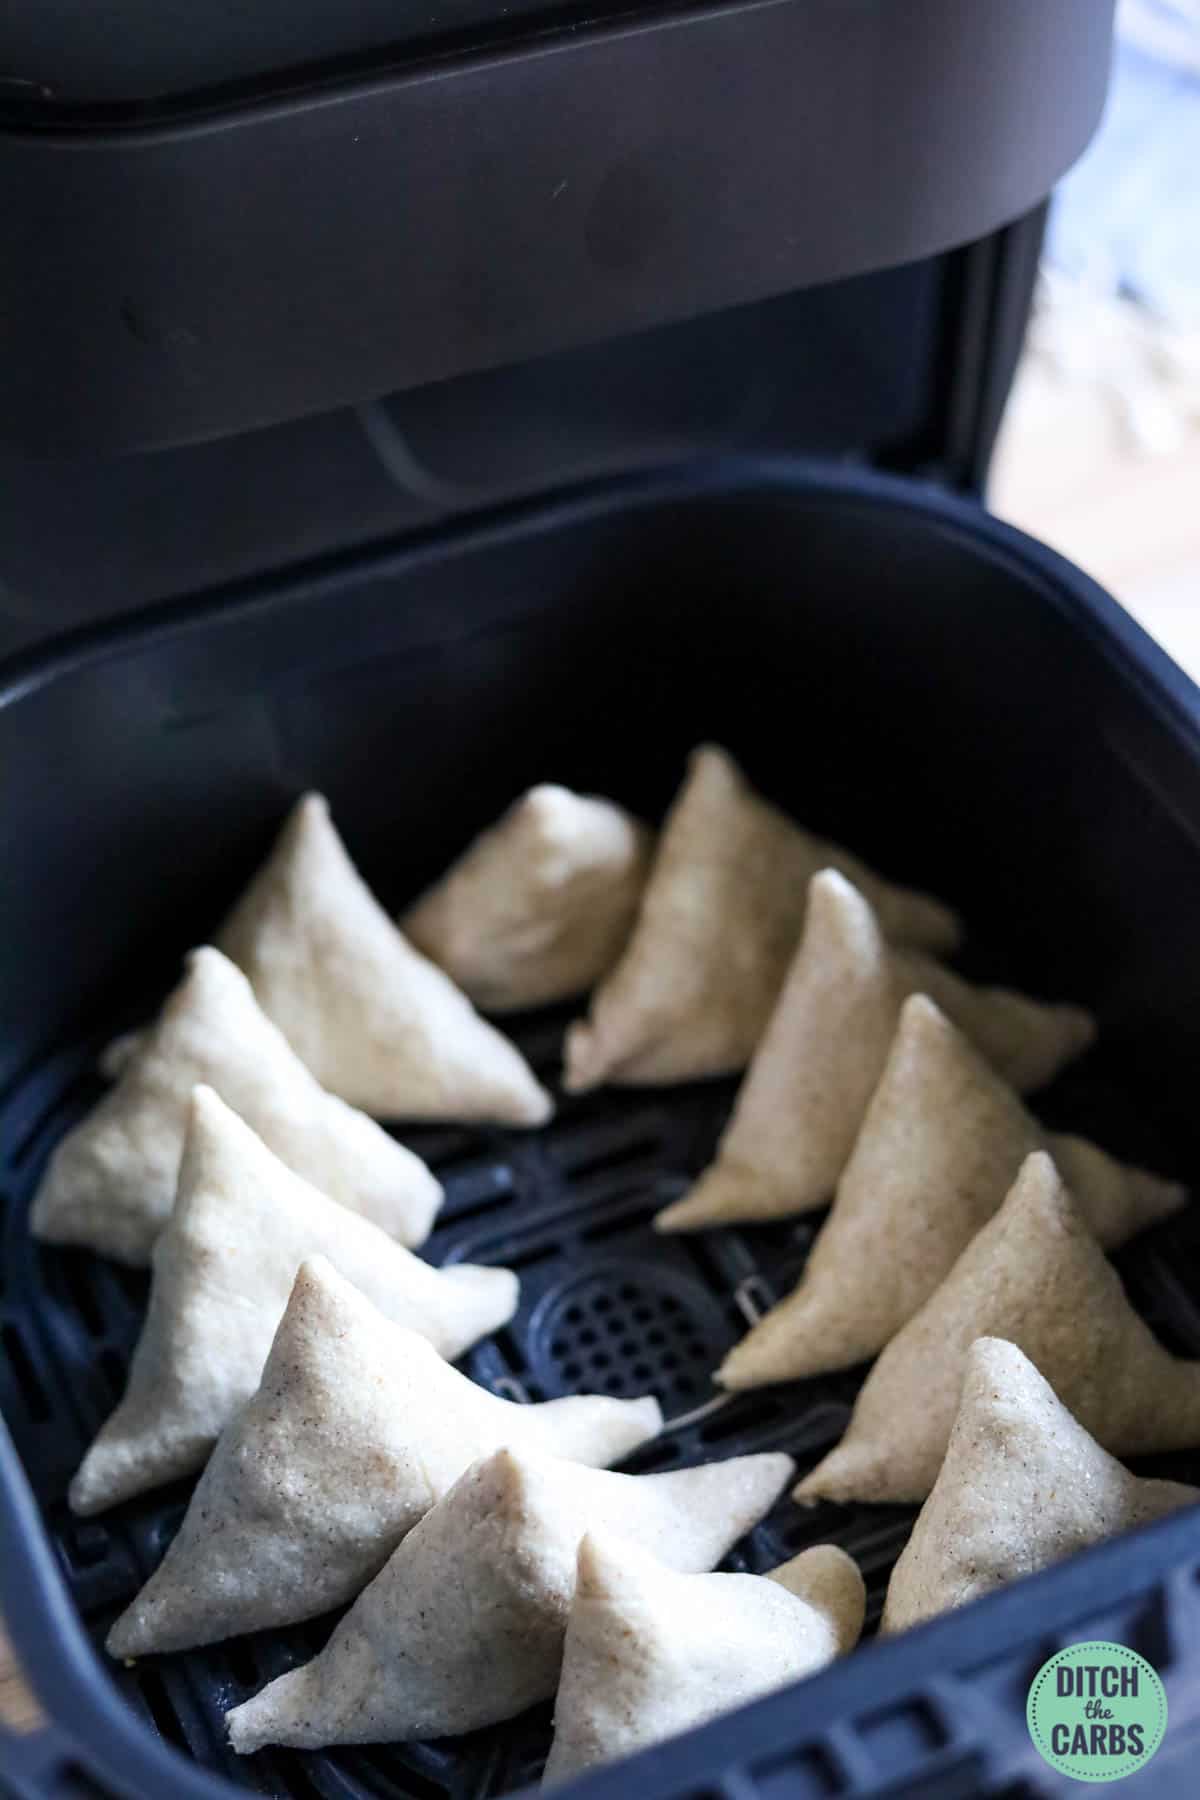 keto samosas cooking in an air fryer basket